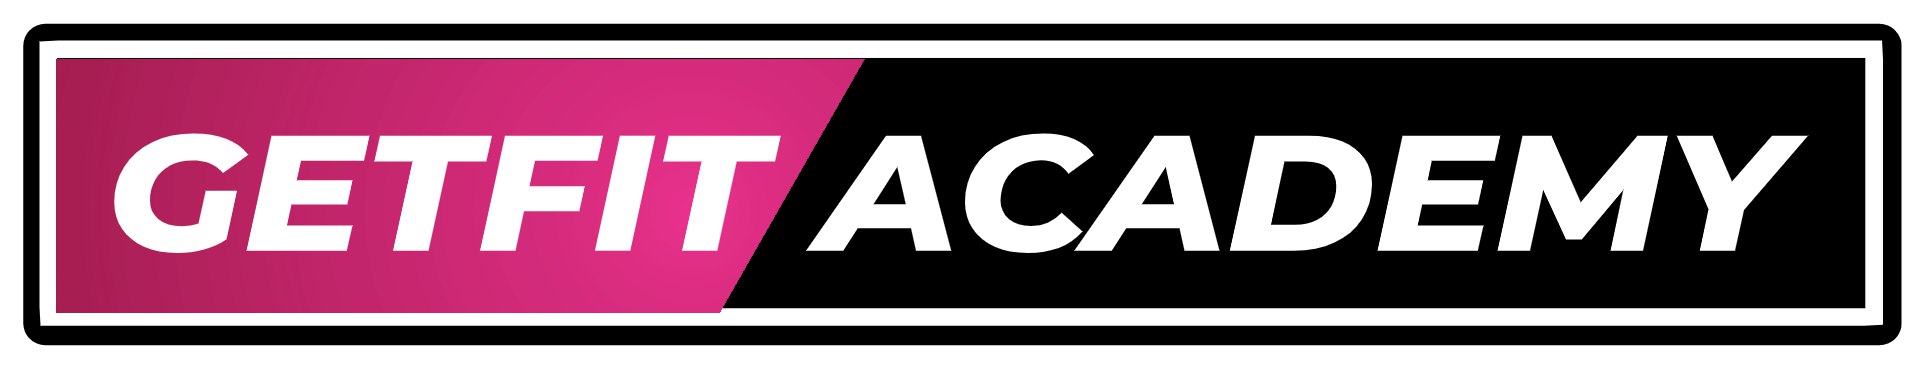 Get Fit Academy logo